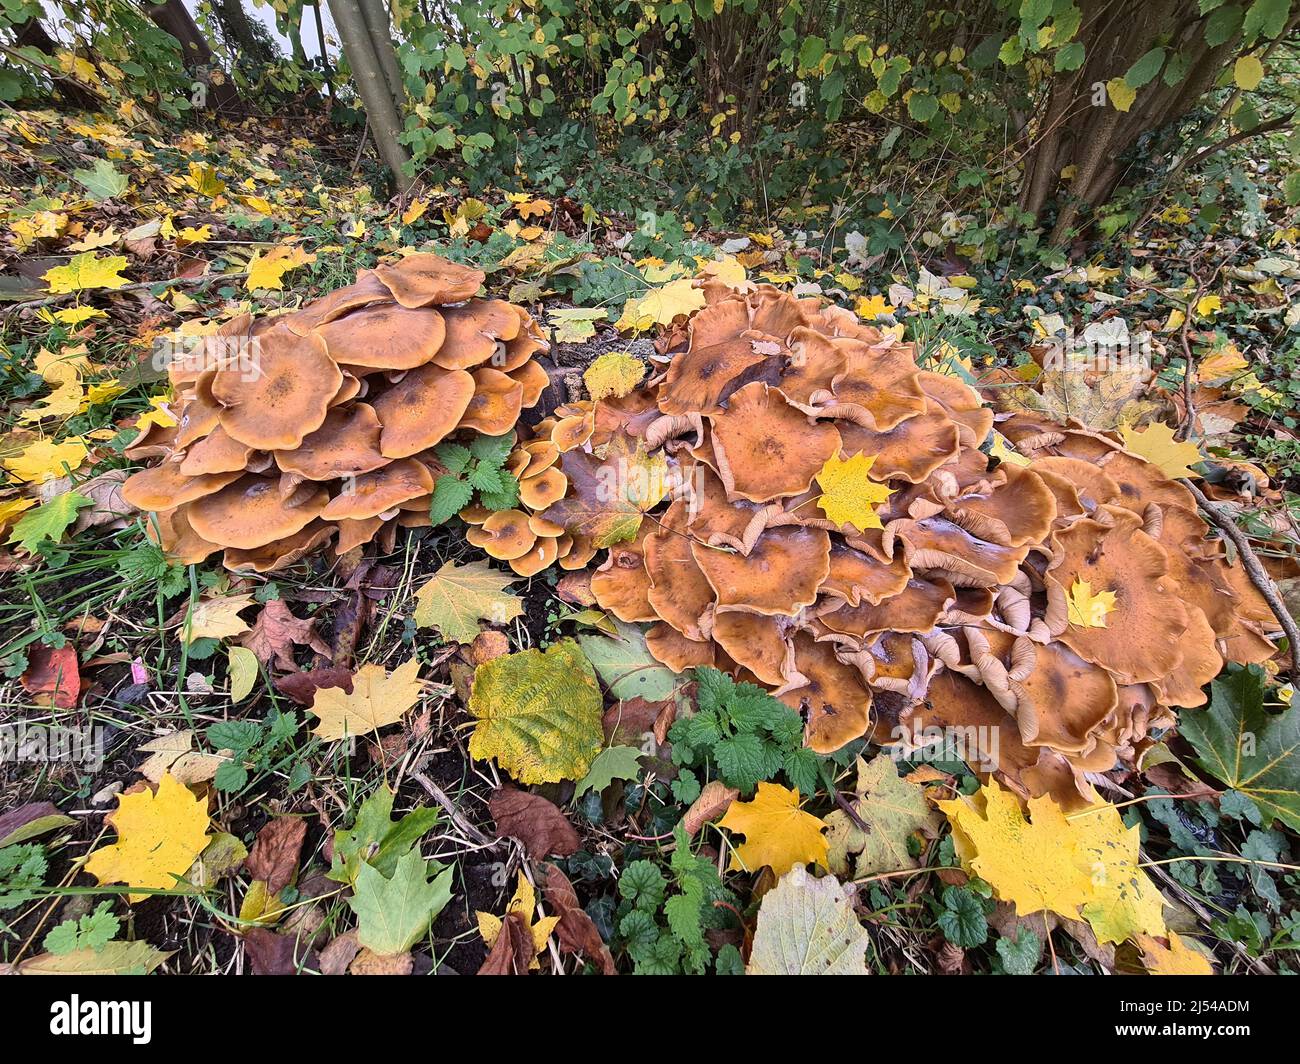 honey fungus (Armillaria mellea), many fruiting bodies amidst autumn leaves, Germany Stock Photo